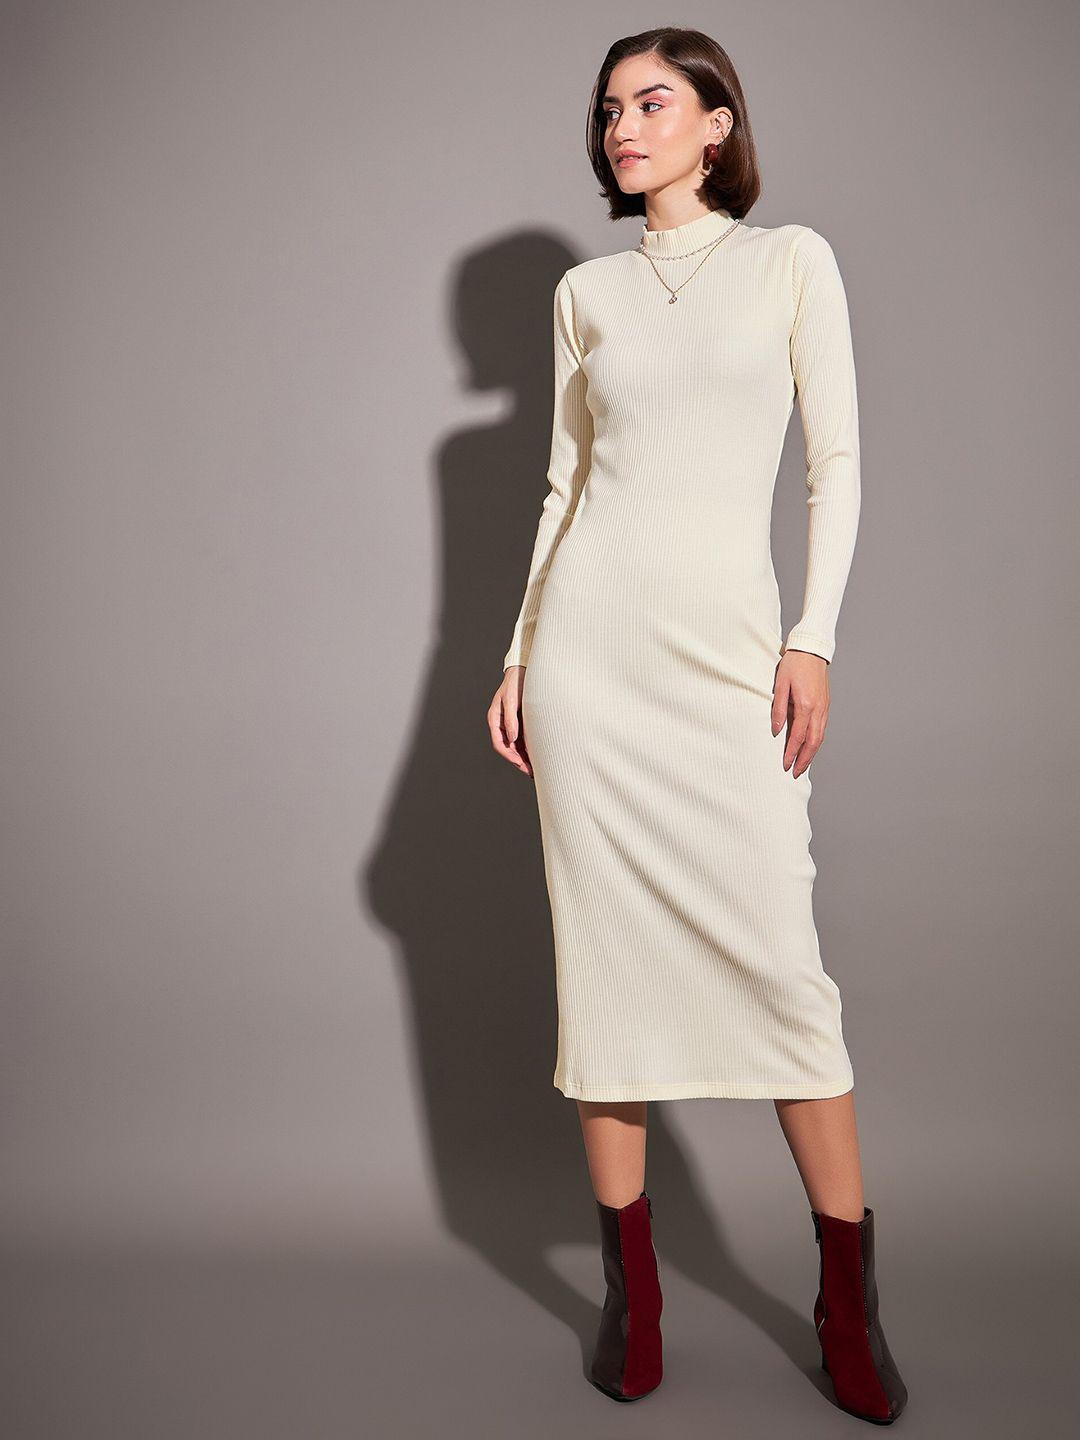 sassafras off white self design high neck sheath dress